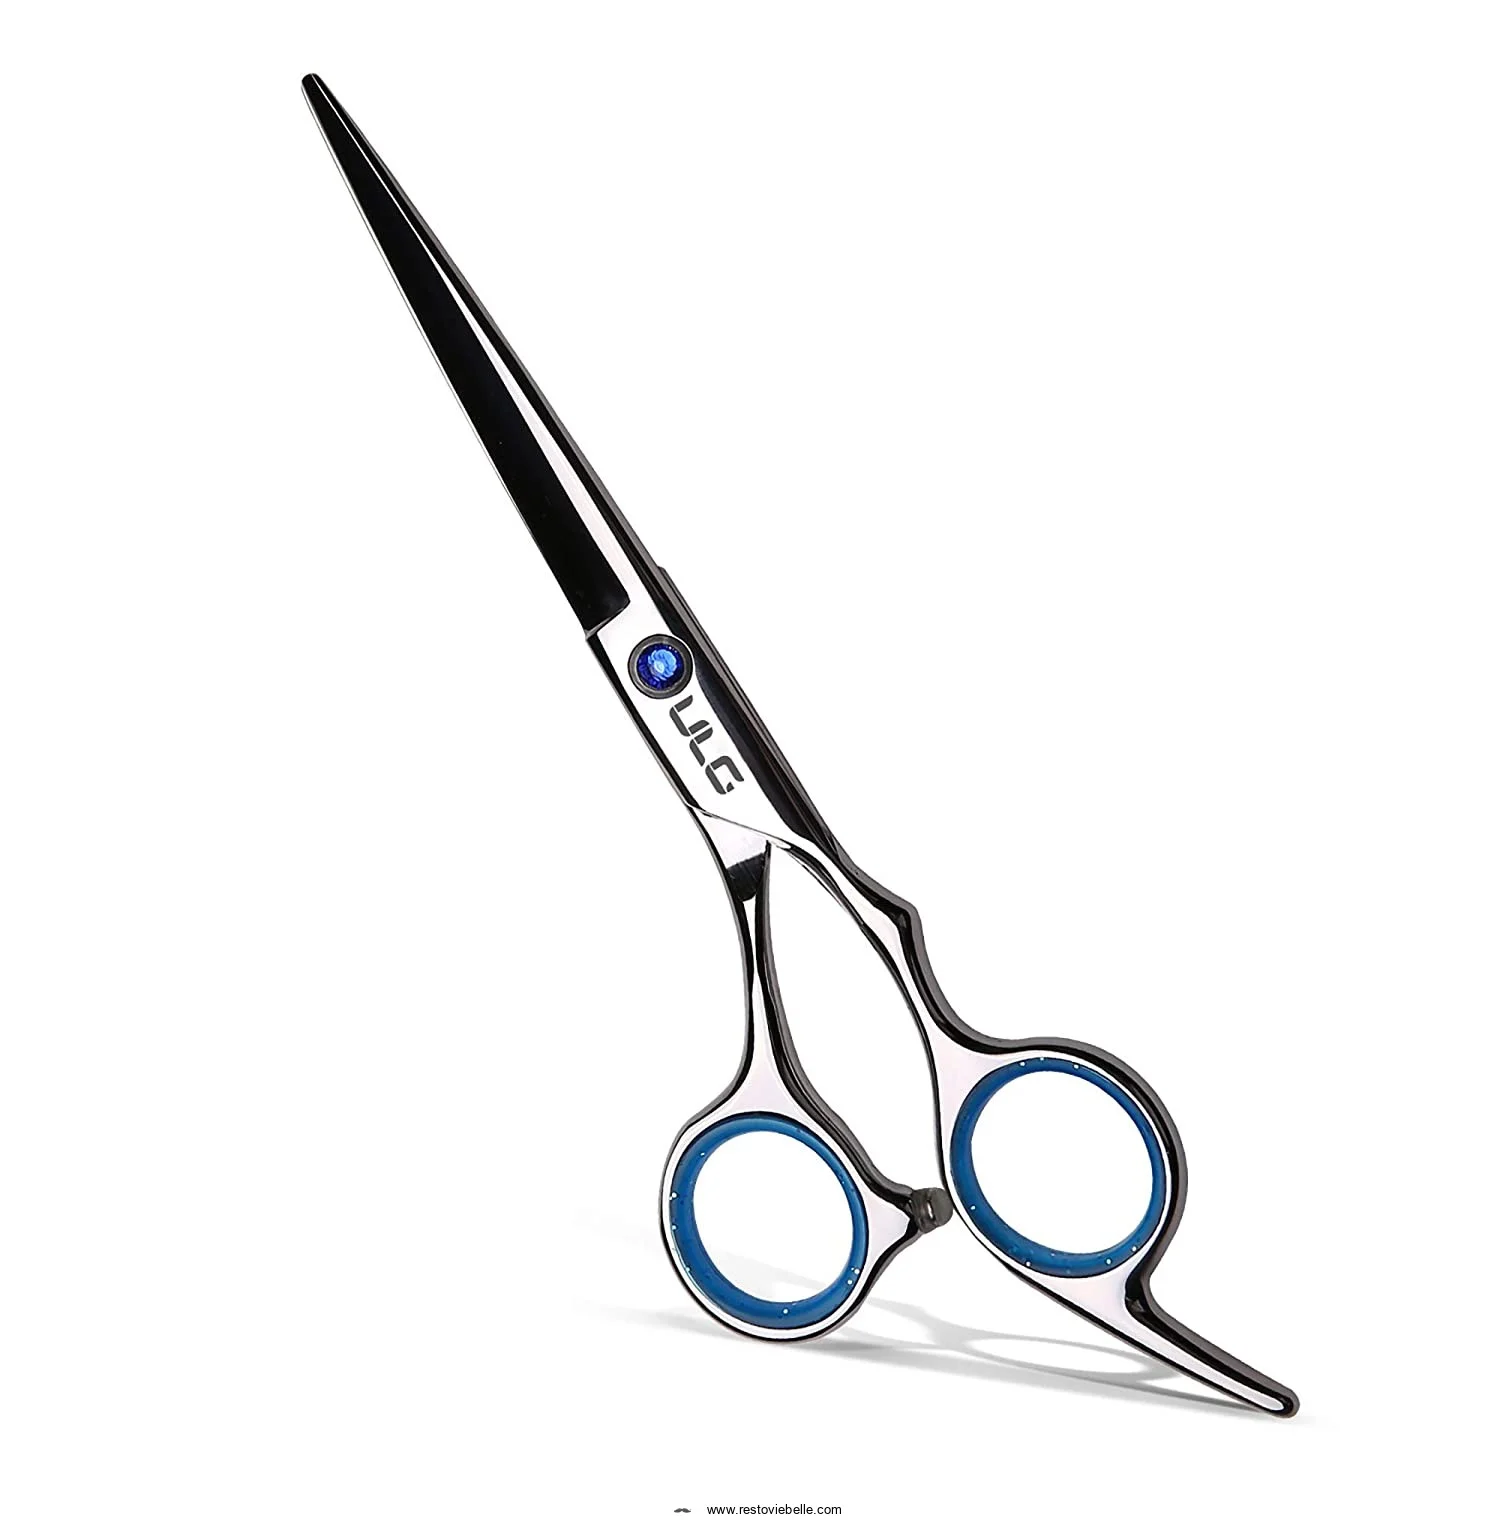 Hair Cutting Scissors Shears Professional B071CWXLY5